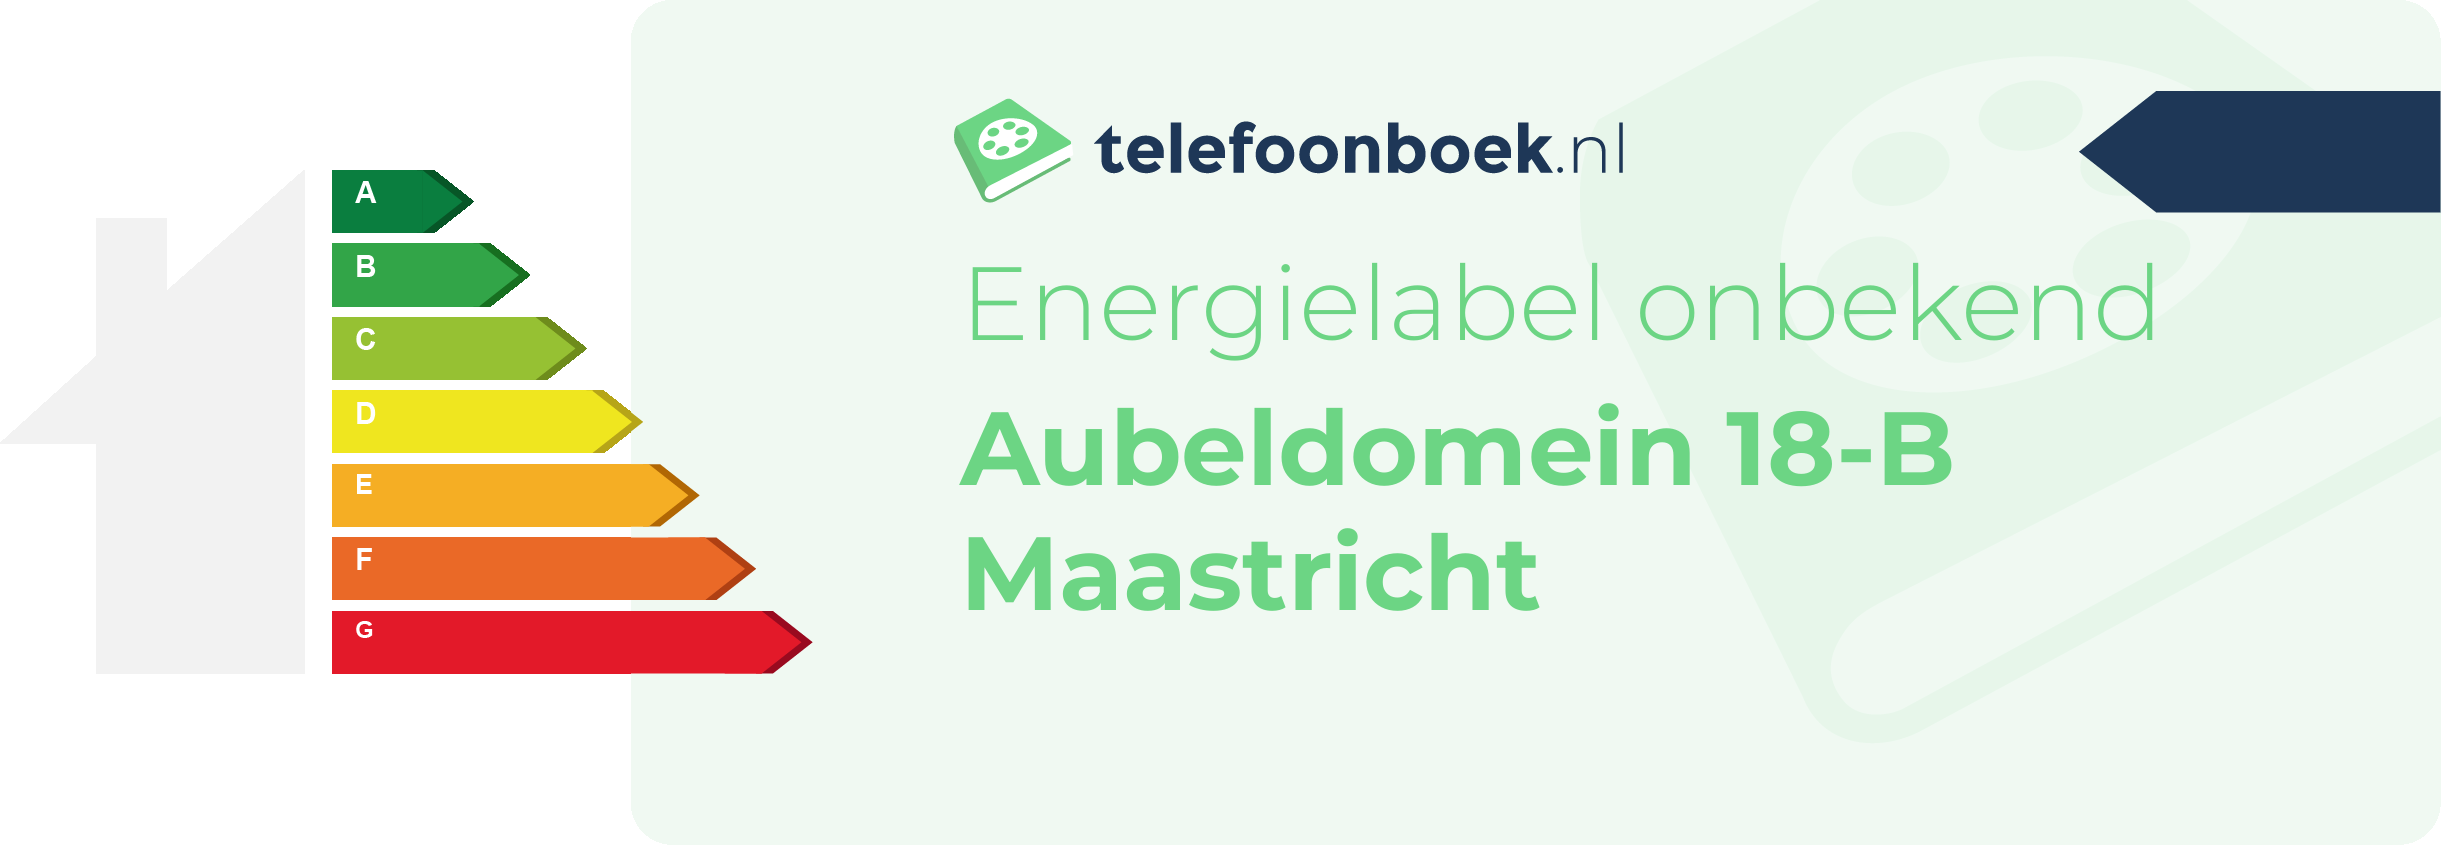 Energielabel Aubeldomein 18-B Maastricht